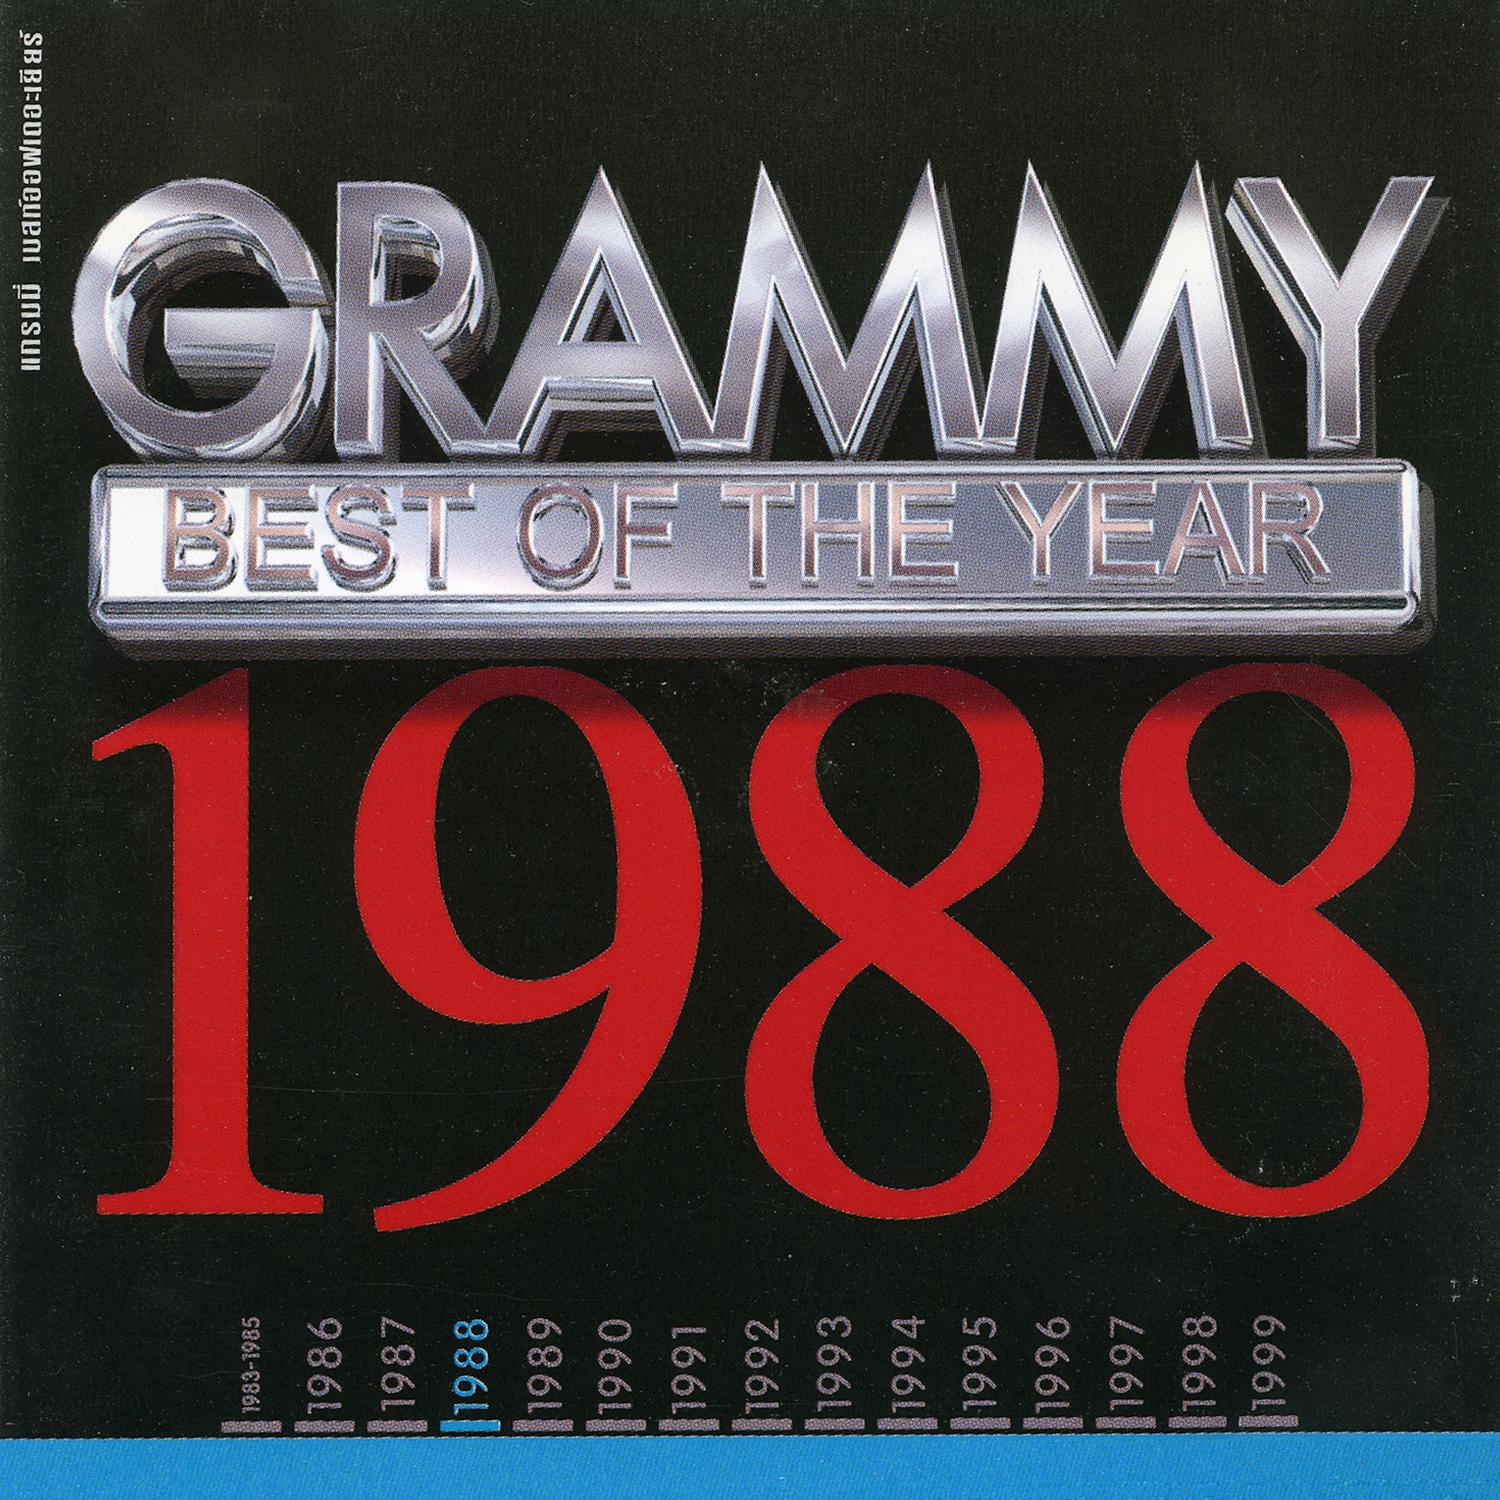 GRAMMY Best Of The Year 1989